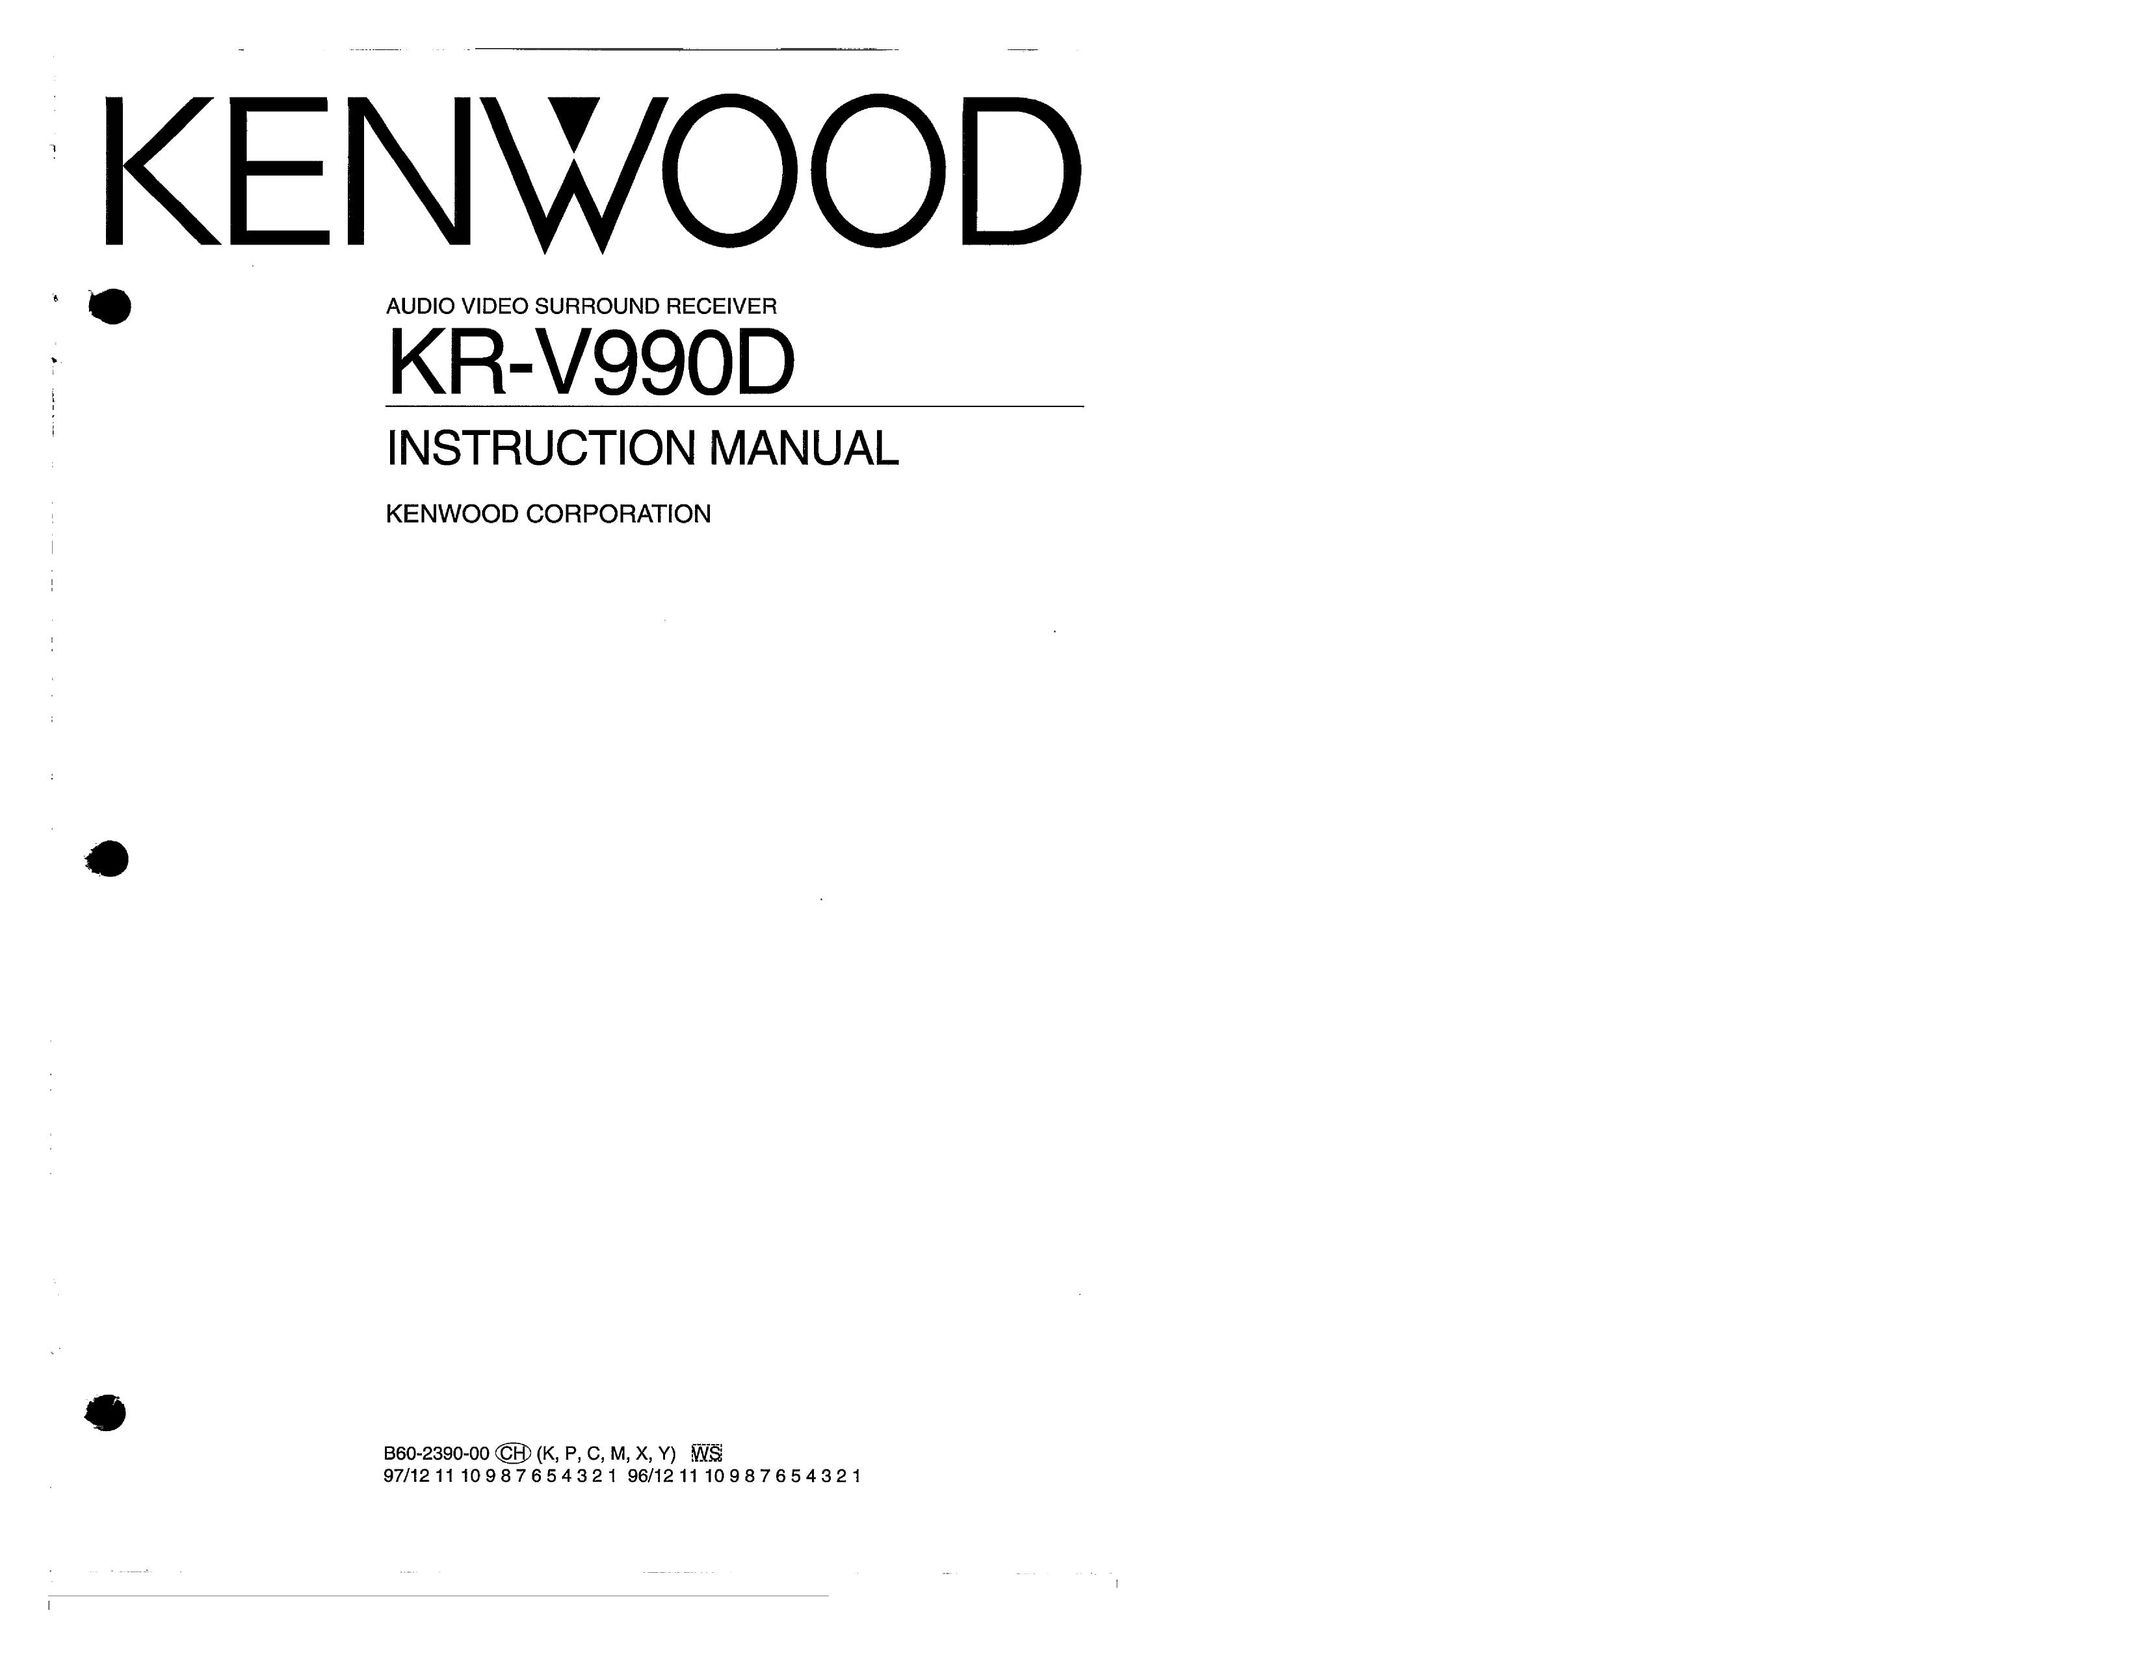 Kenwood KR-V990D Home Theater System User Manual